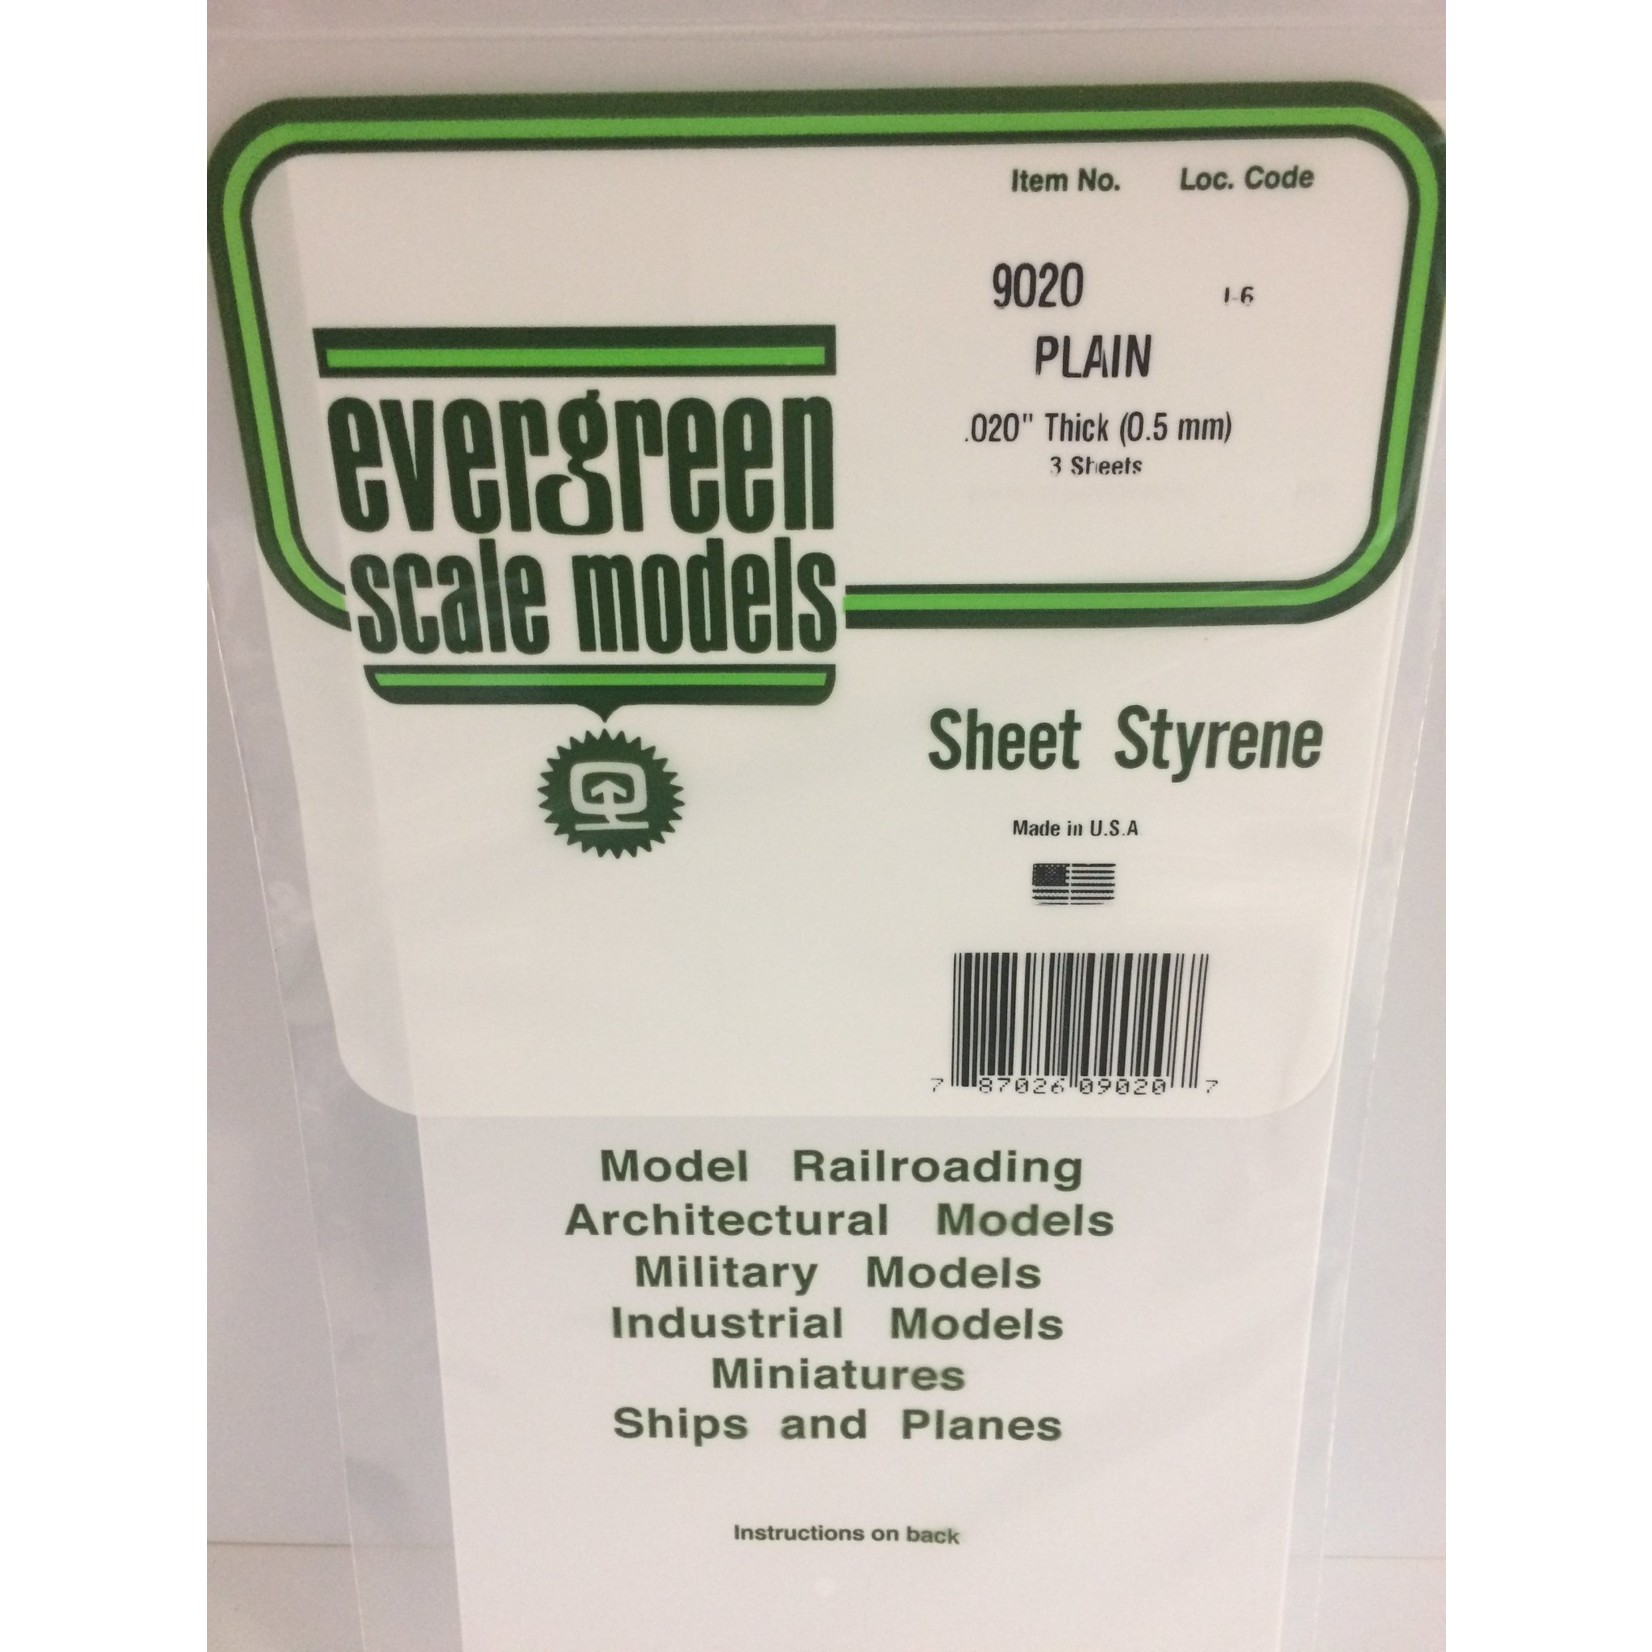 Evergreen Scale Models Evergreen Scale Models White Sheet .020 x 6 x 12 (3) #9020